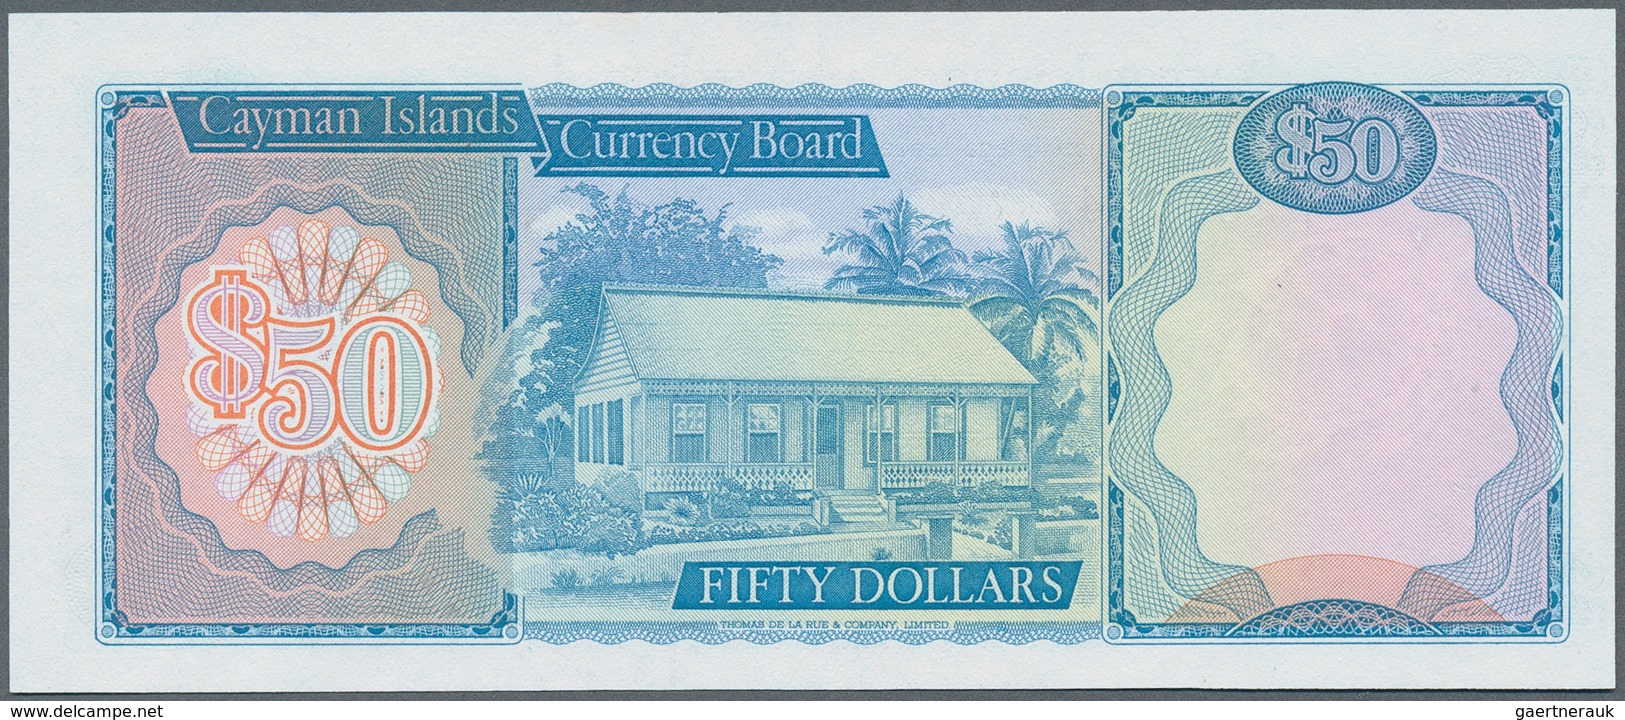 01264 Cayman Islands: 50 Dollras L.1974, P. 10 In Condition: UNC. - Cayman Islands